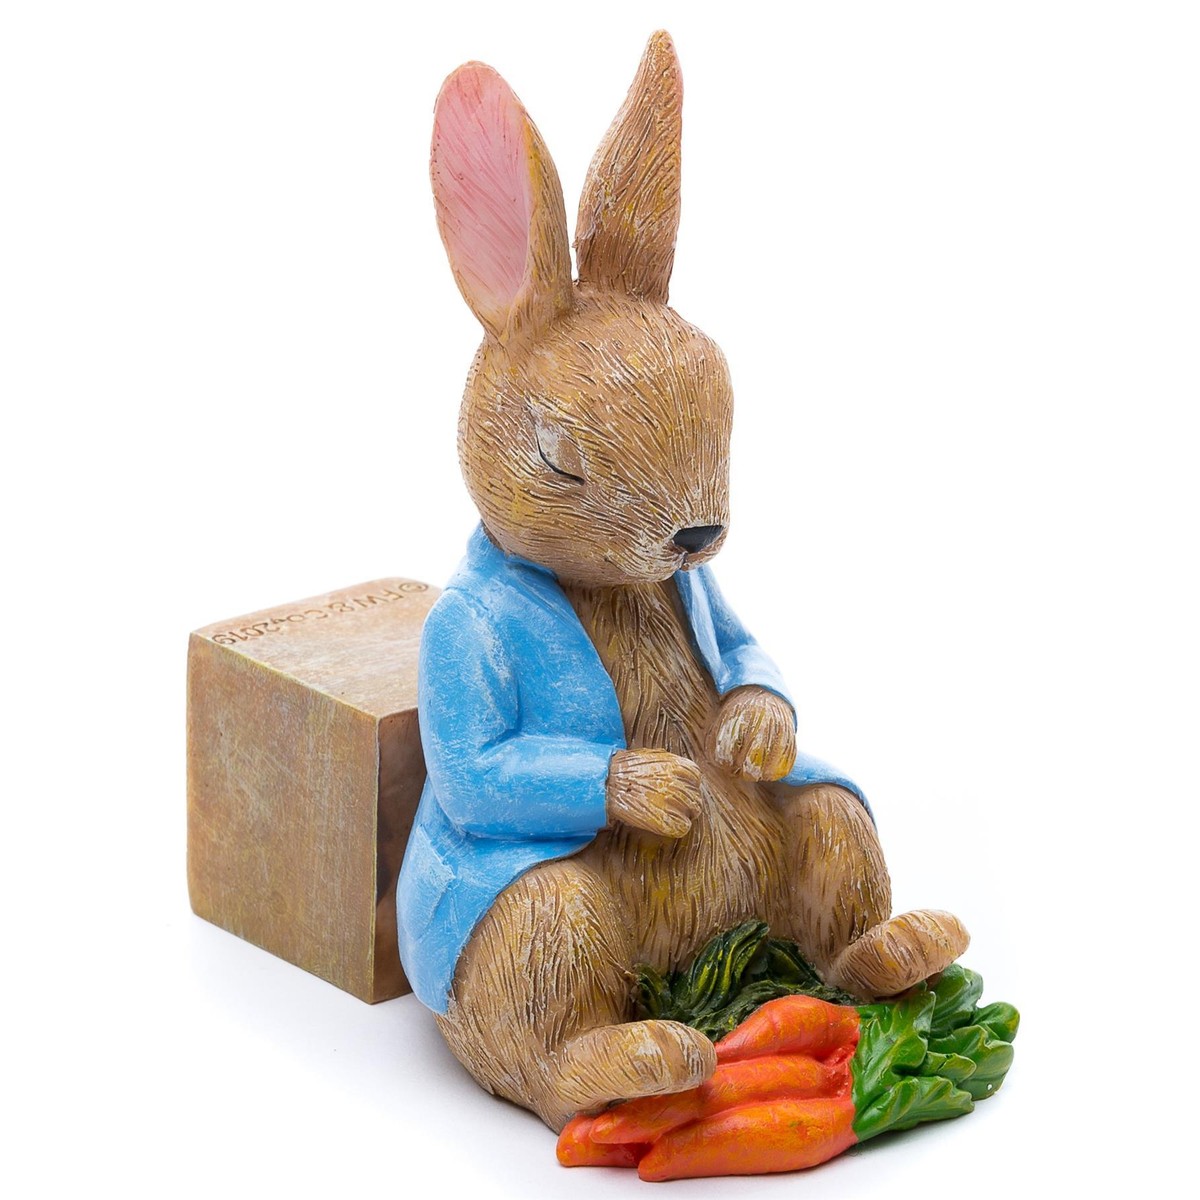  Peter Rabbit Figurines Pieds Déco Lapin Peter Rabbit Mixt 5  6.5x8x11cm